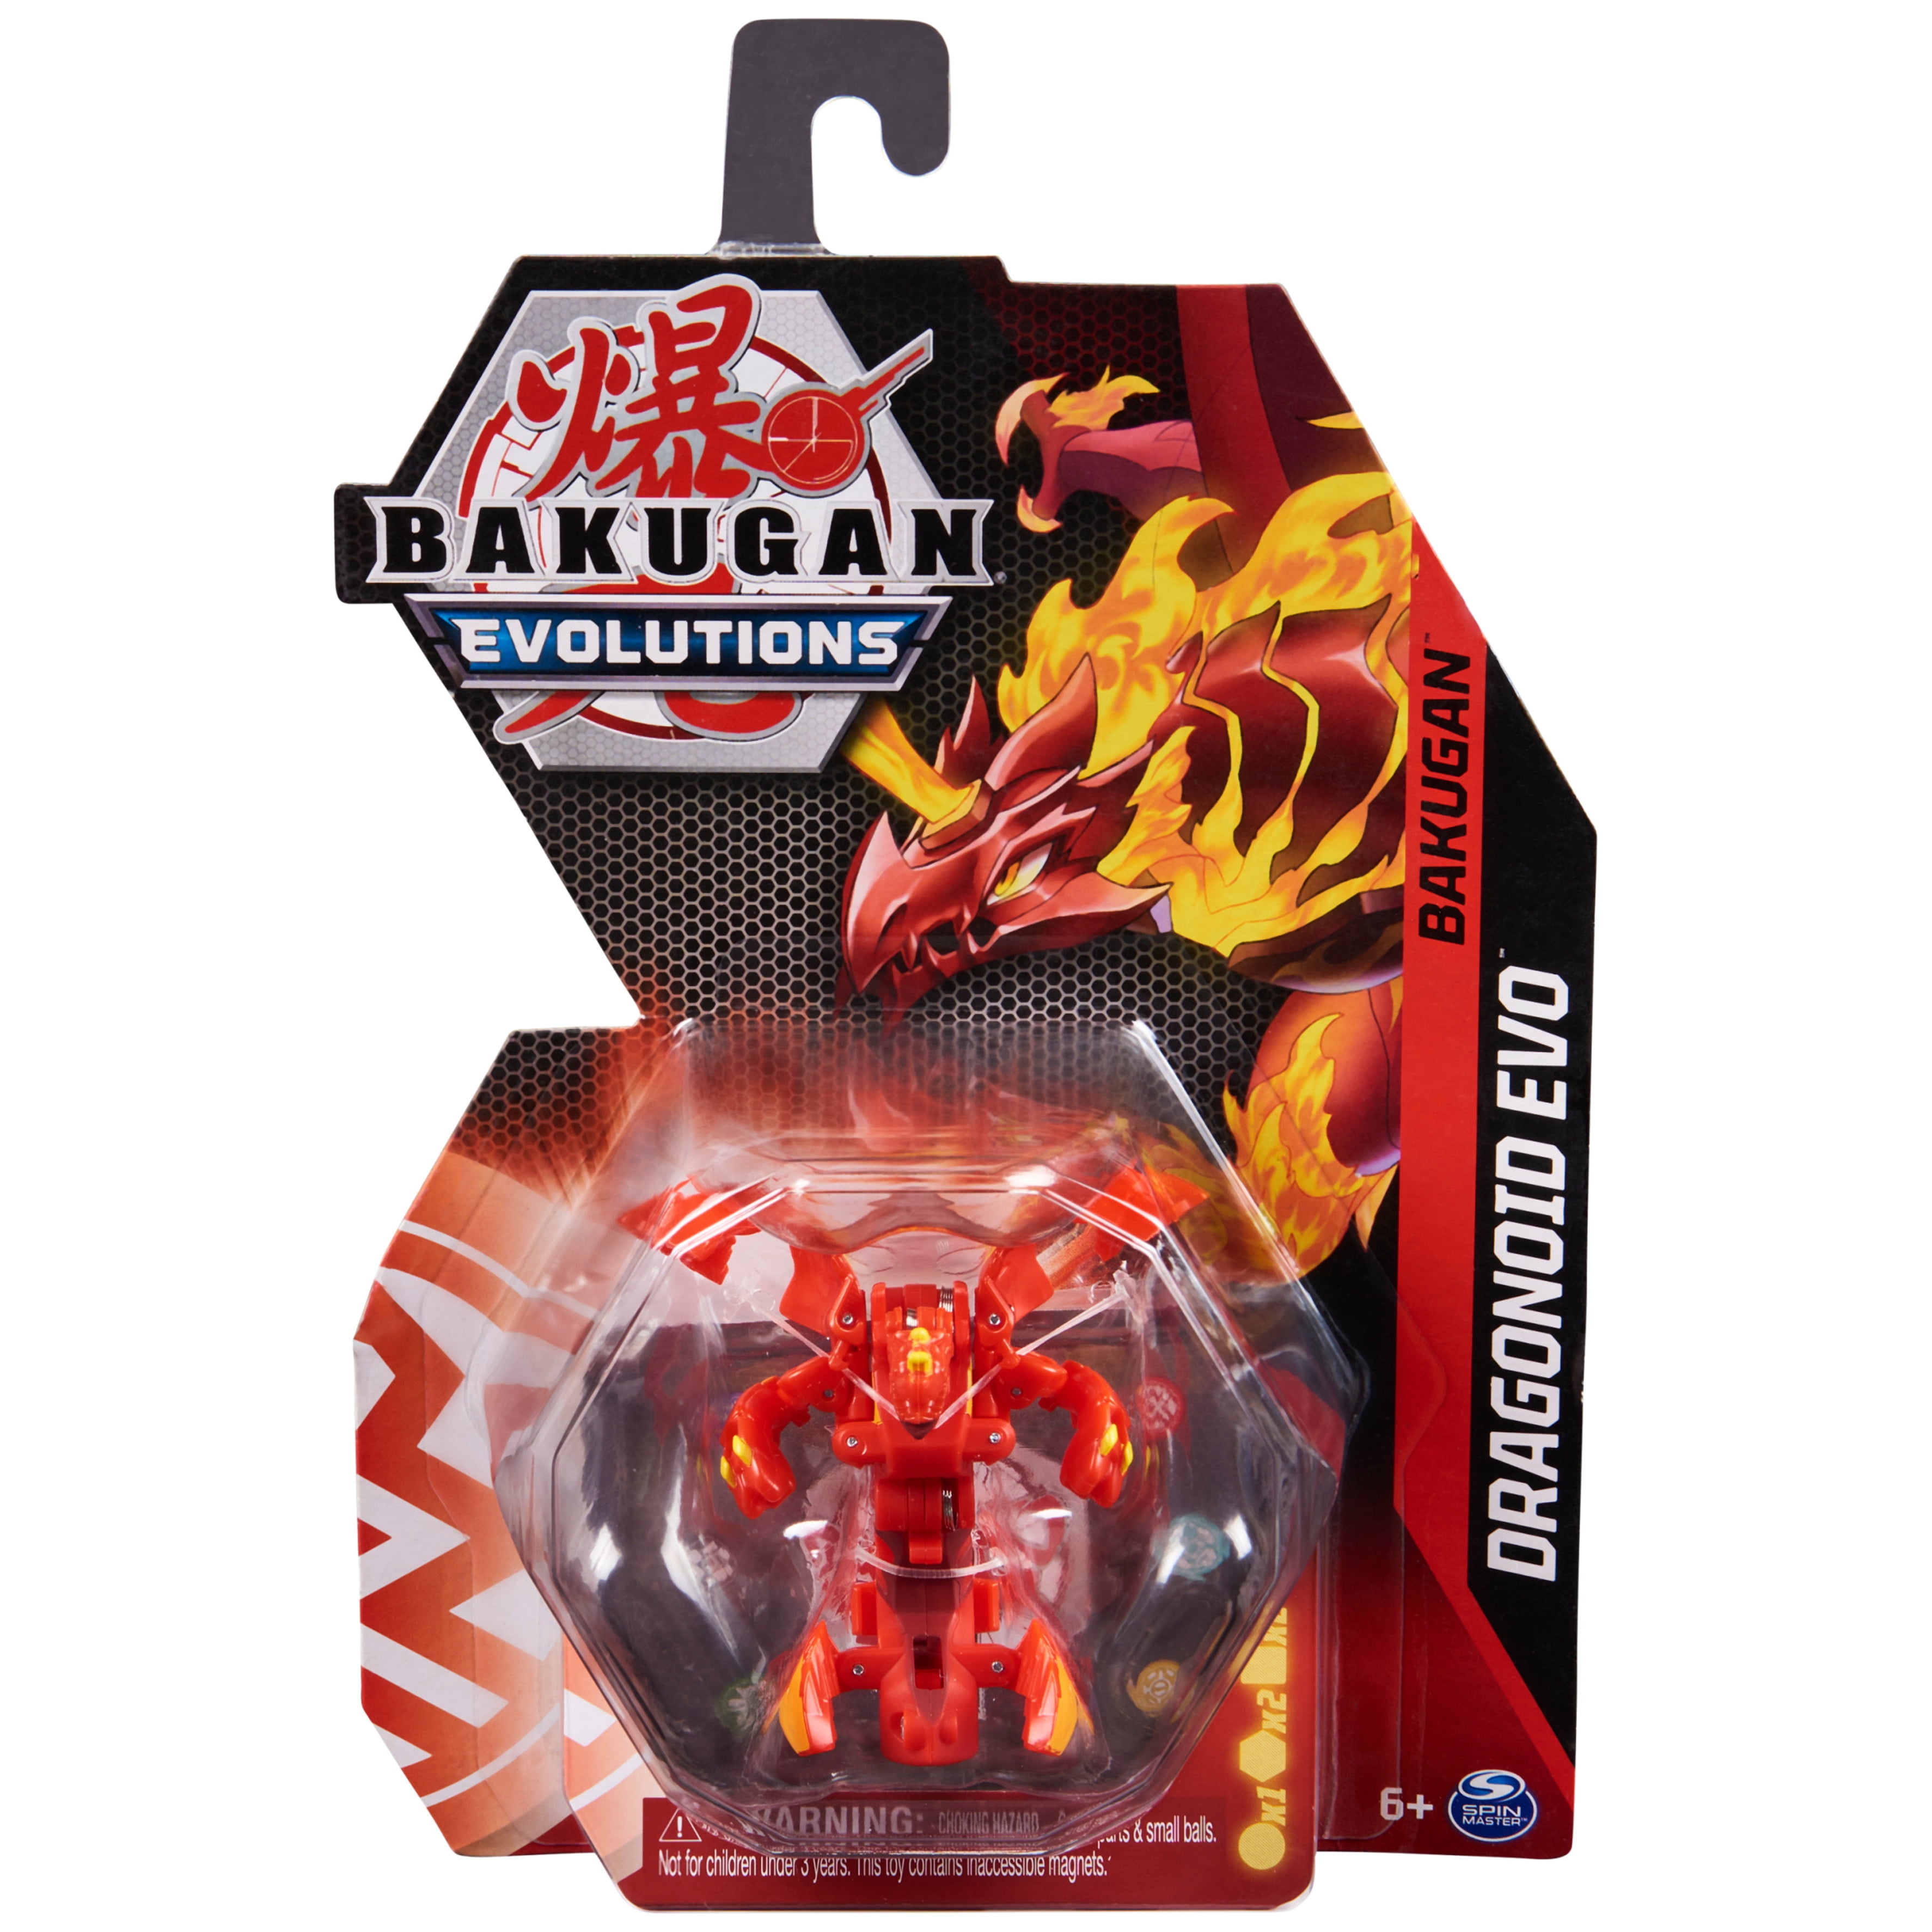 spænding grill Forpustet Bakugan Evolutions, Dragonoid Evo Bakugan and Trading Card - Walmart.com